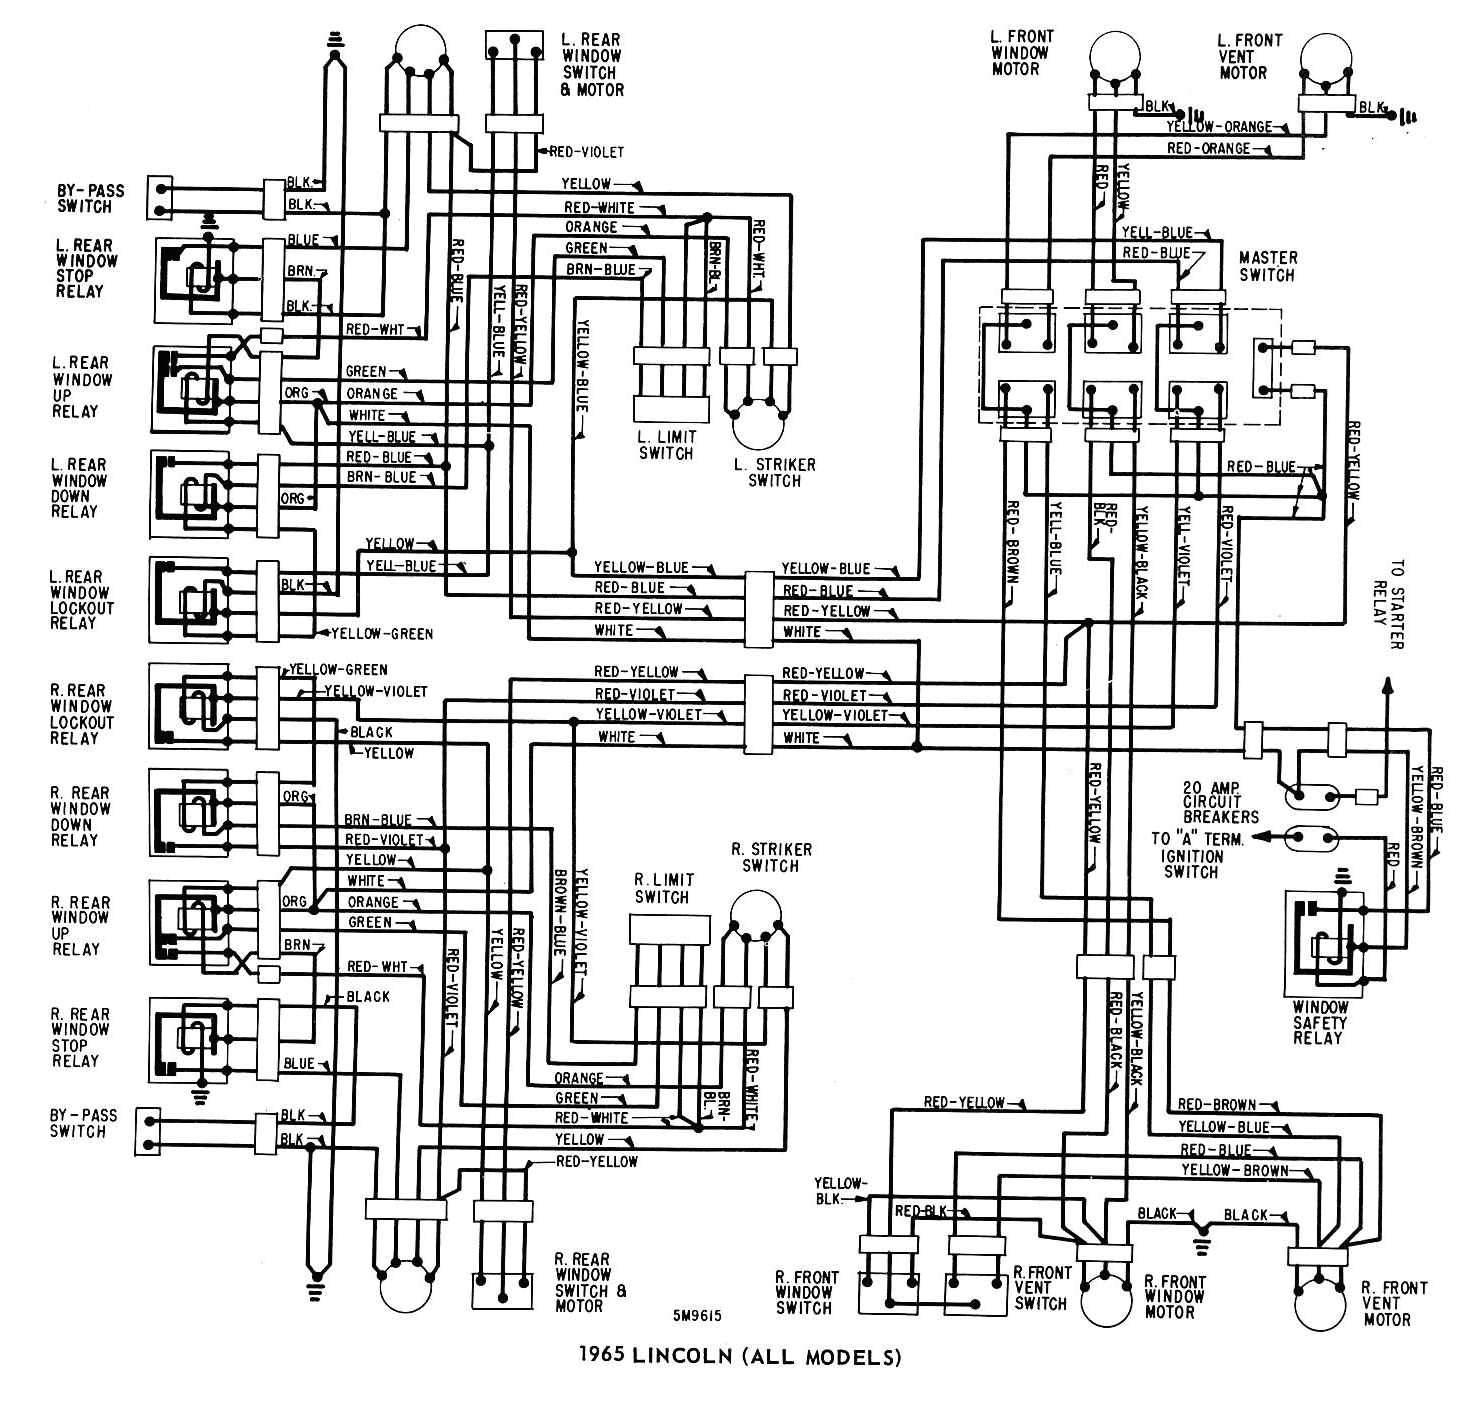 power window circuit diagram of 1966 oldsmobile schema diagram power tail gate circuit diagram of 1966 chevrolet